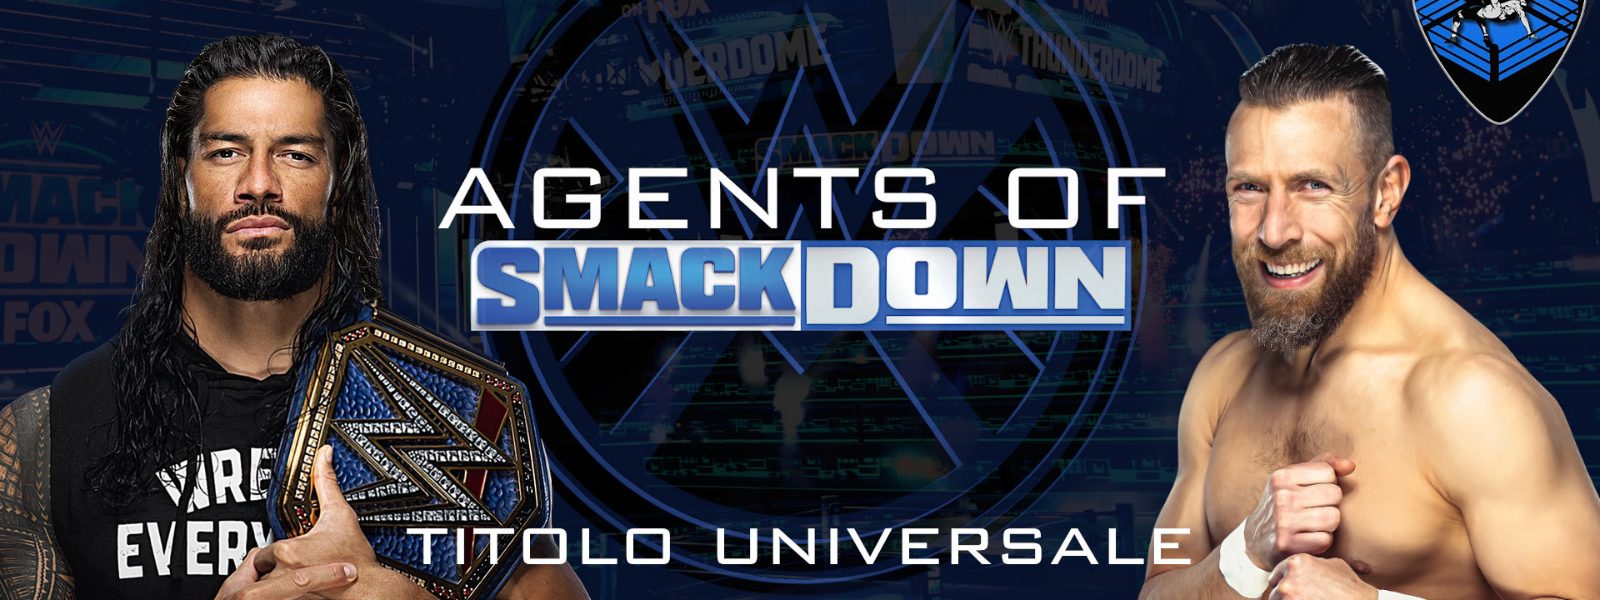 Titolo Universale VS Carriera - Agents Of Smackdown EP.4